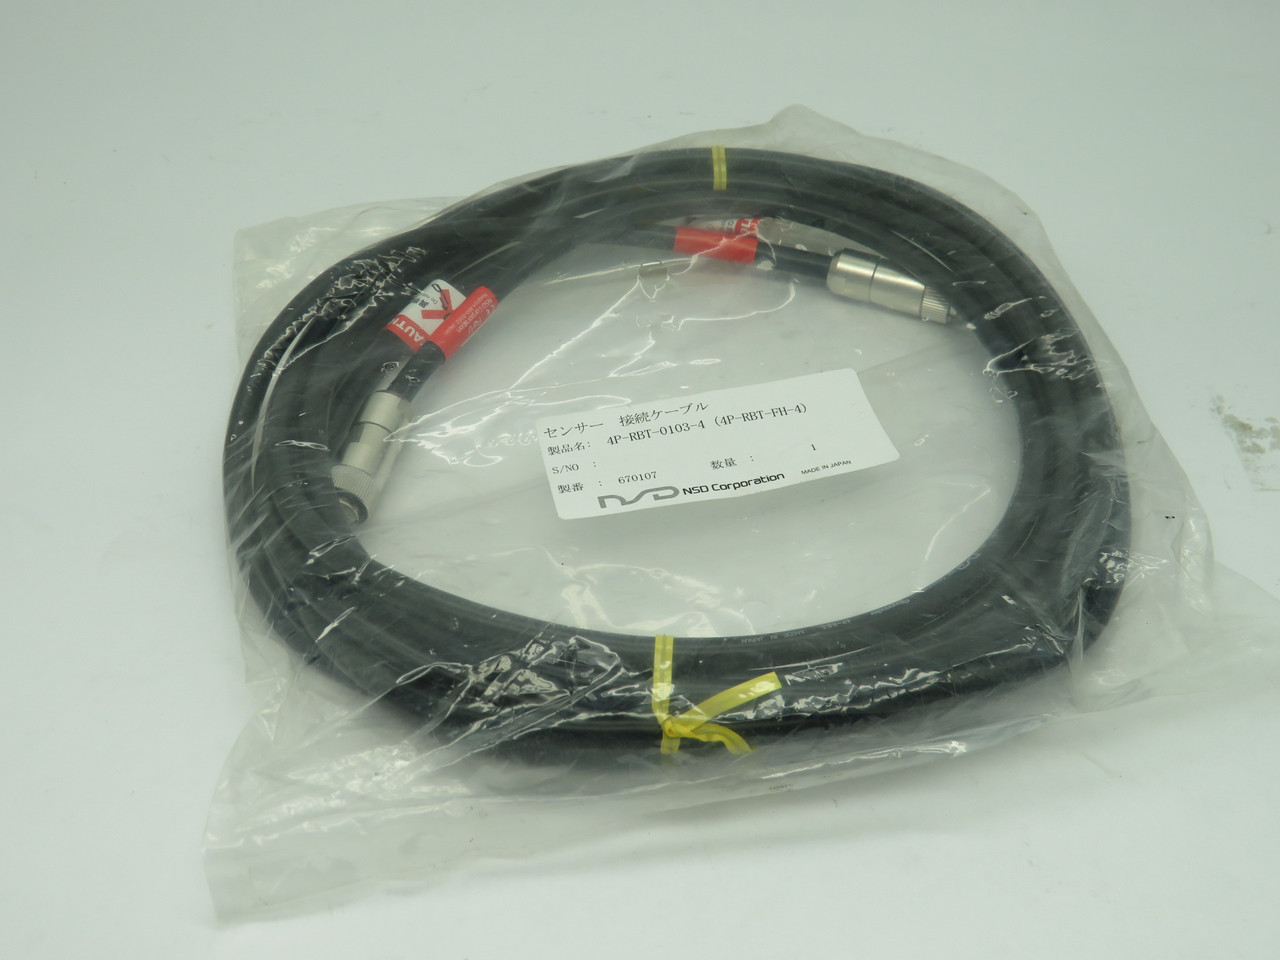 NSD 4P-RBT-0103-4 Sensor Cable NWB